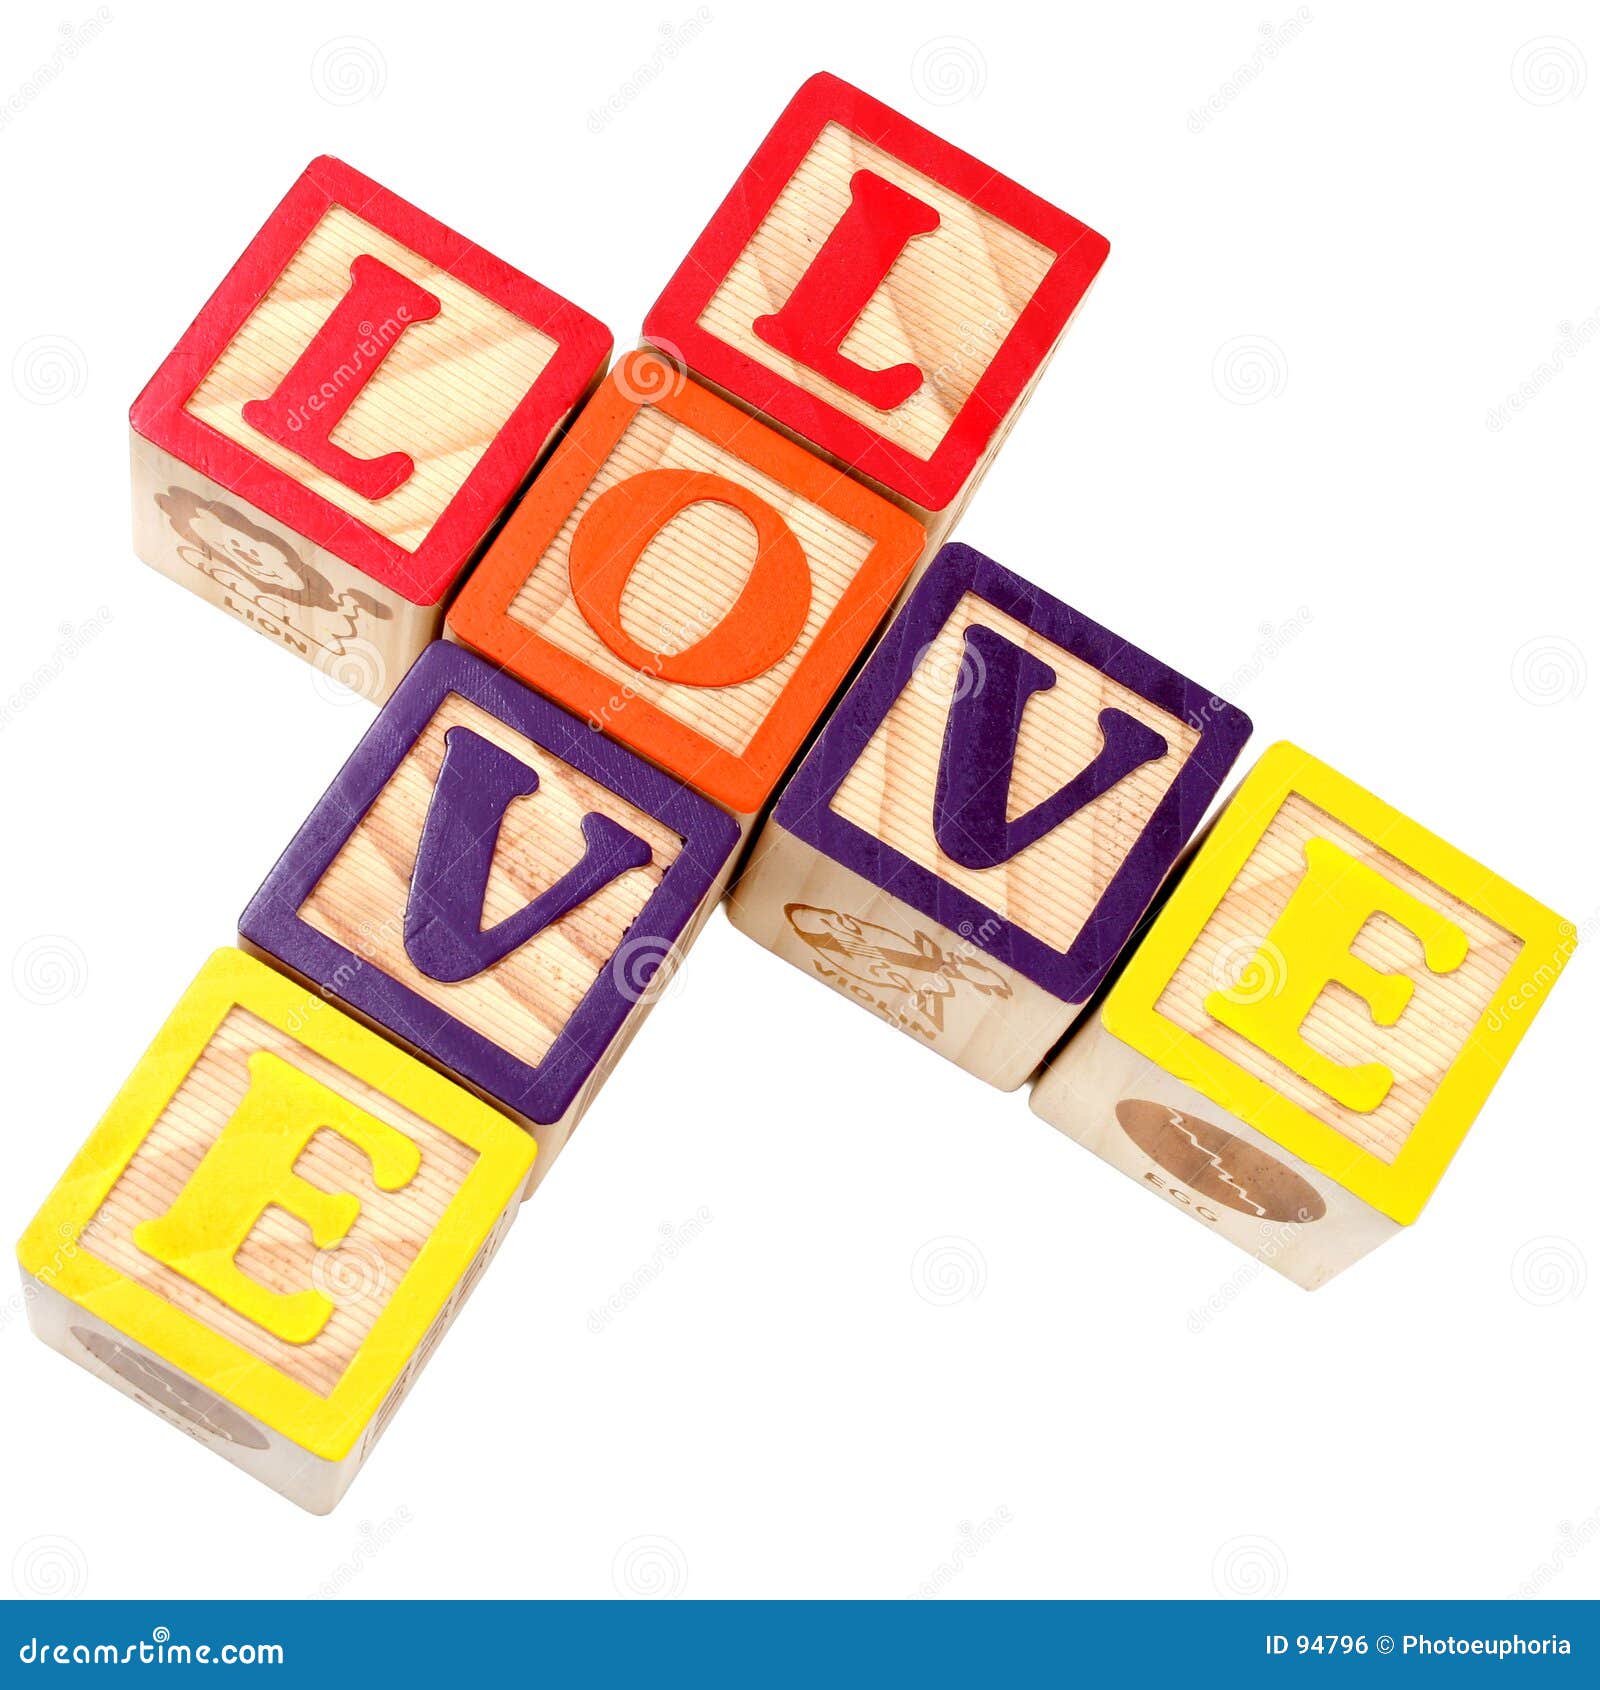 alphabet blocks spelling love in criss cross style